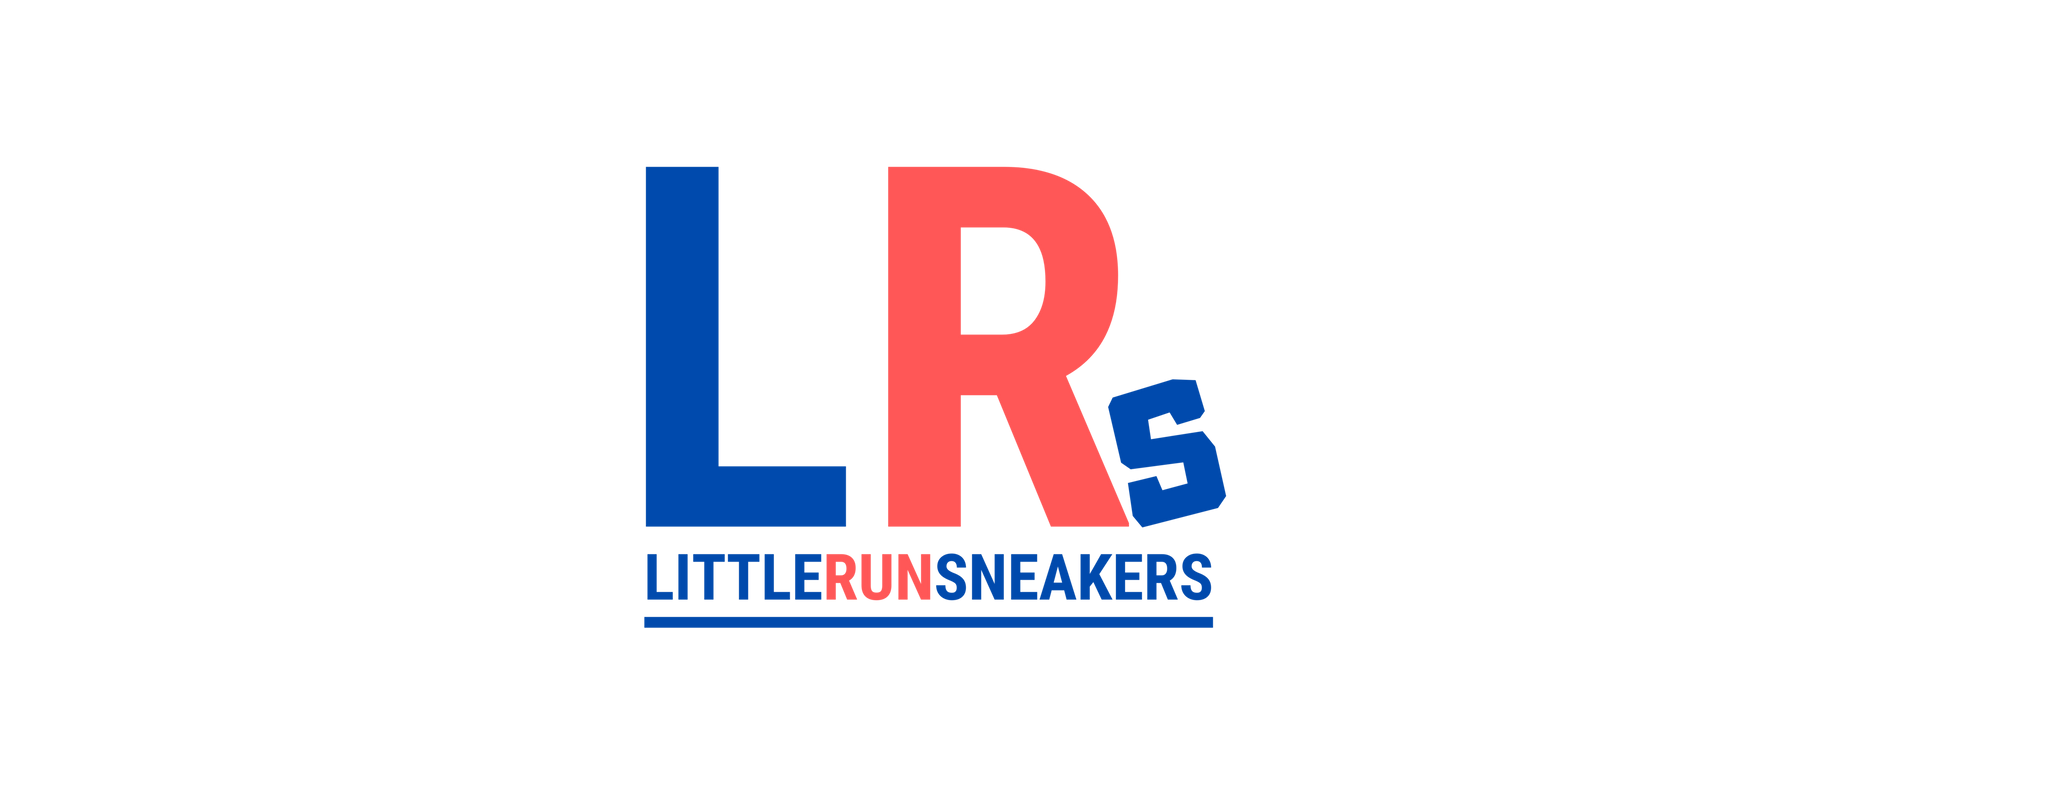 Little Run Sneakers Gift Card 150 €